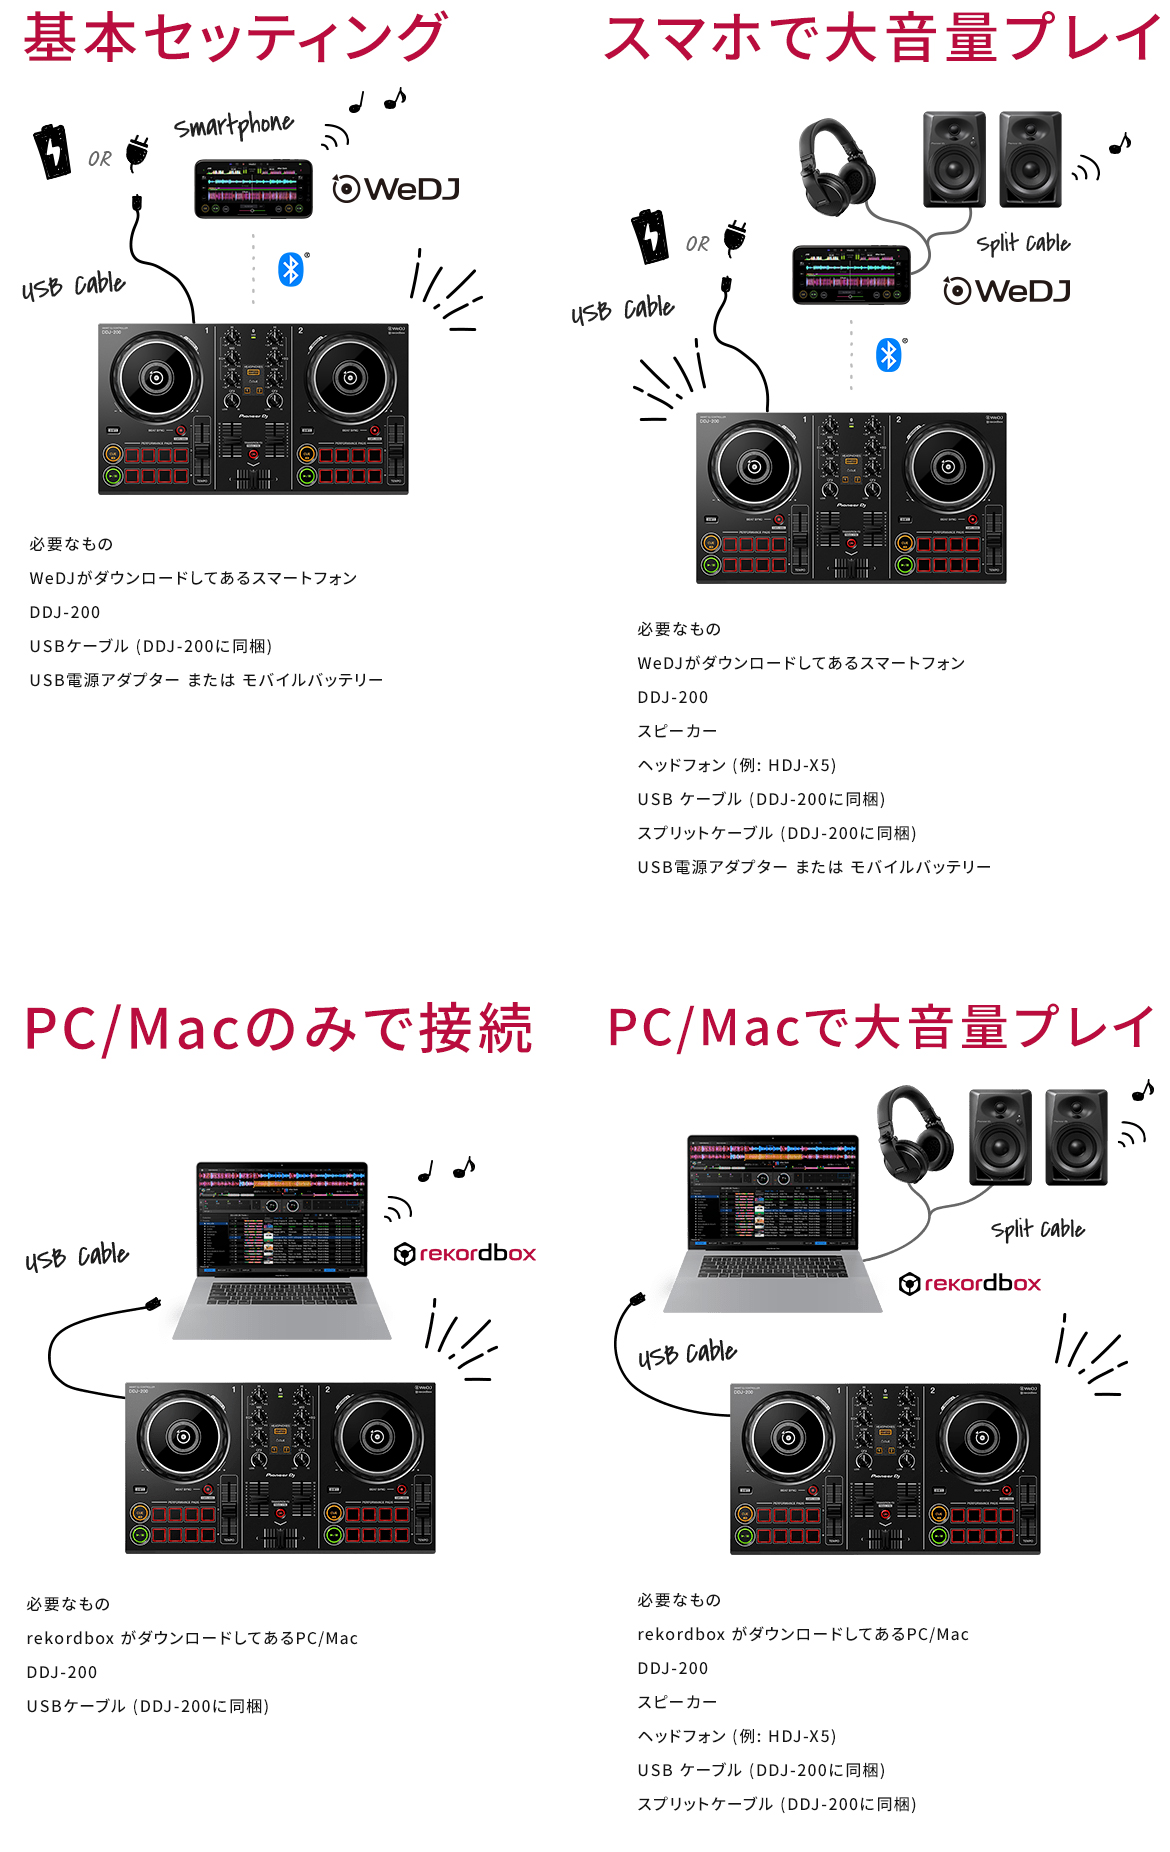 ◇DDJ-200 Pioneer DJ スマートDJコントローラー-